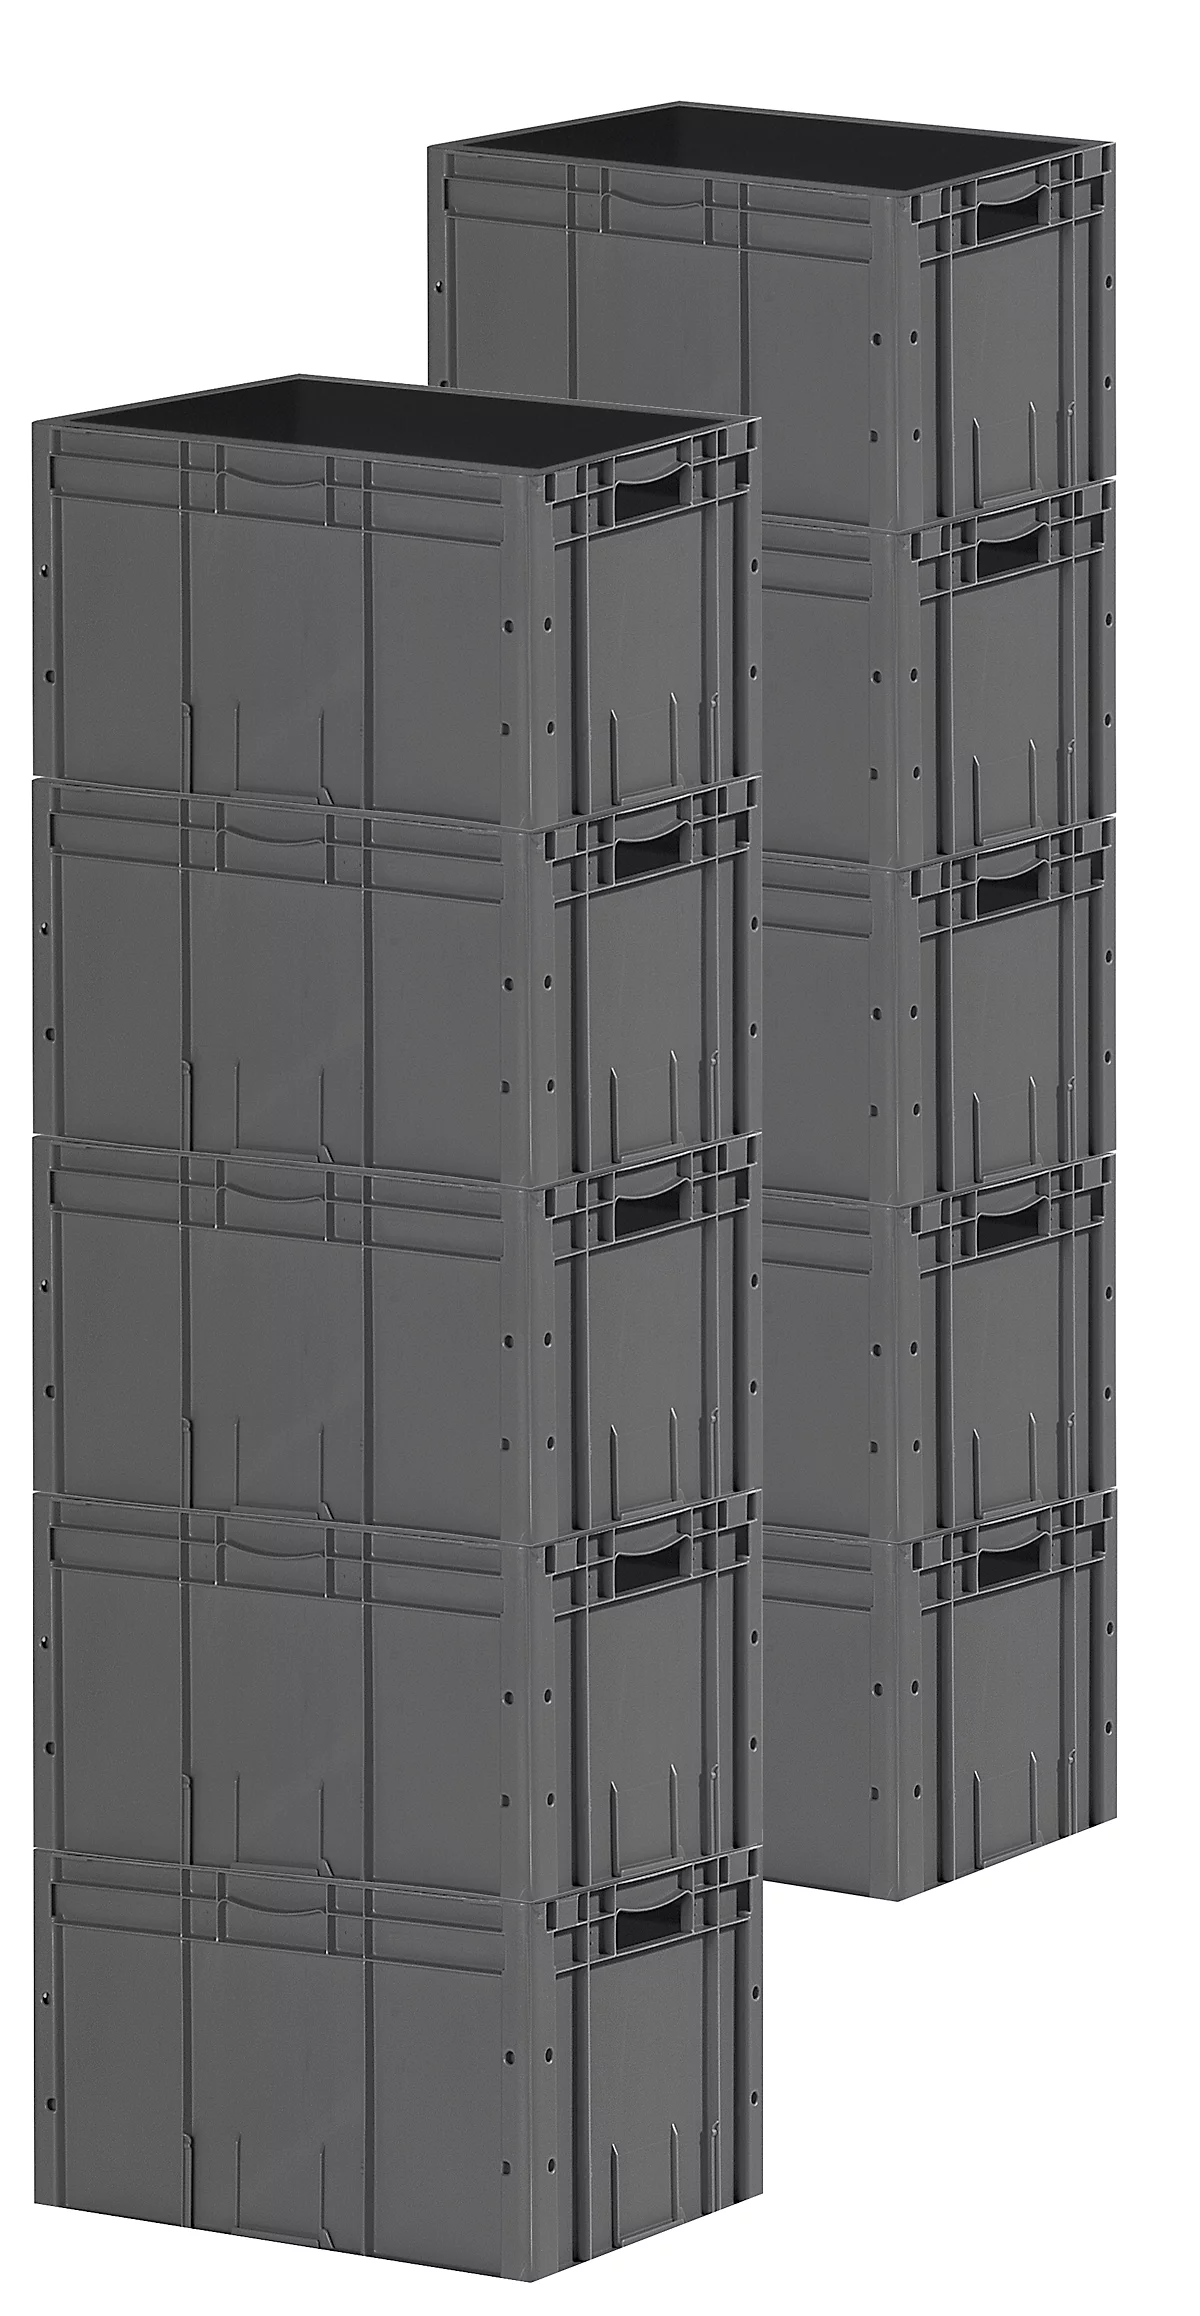 Euro Box SSI Schäfer serie LTF 6320, volumen 62,7 l, hasta 30 kg, asa pasante, L 600 x A 400 mm, Blue Angel, PP reciclado, gris hierro, 10 piezas